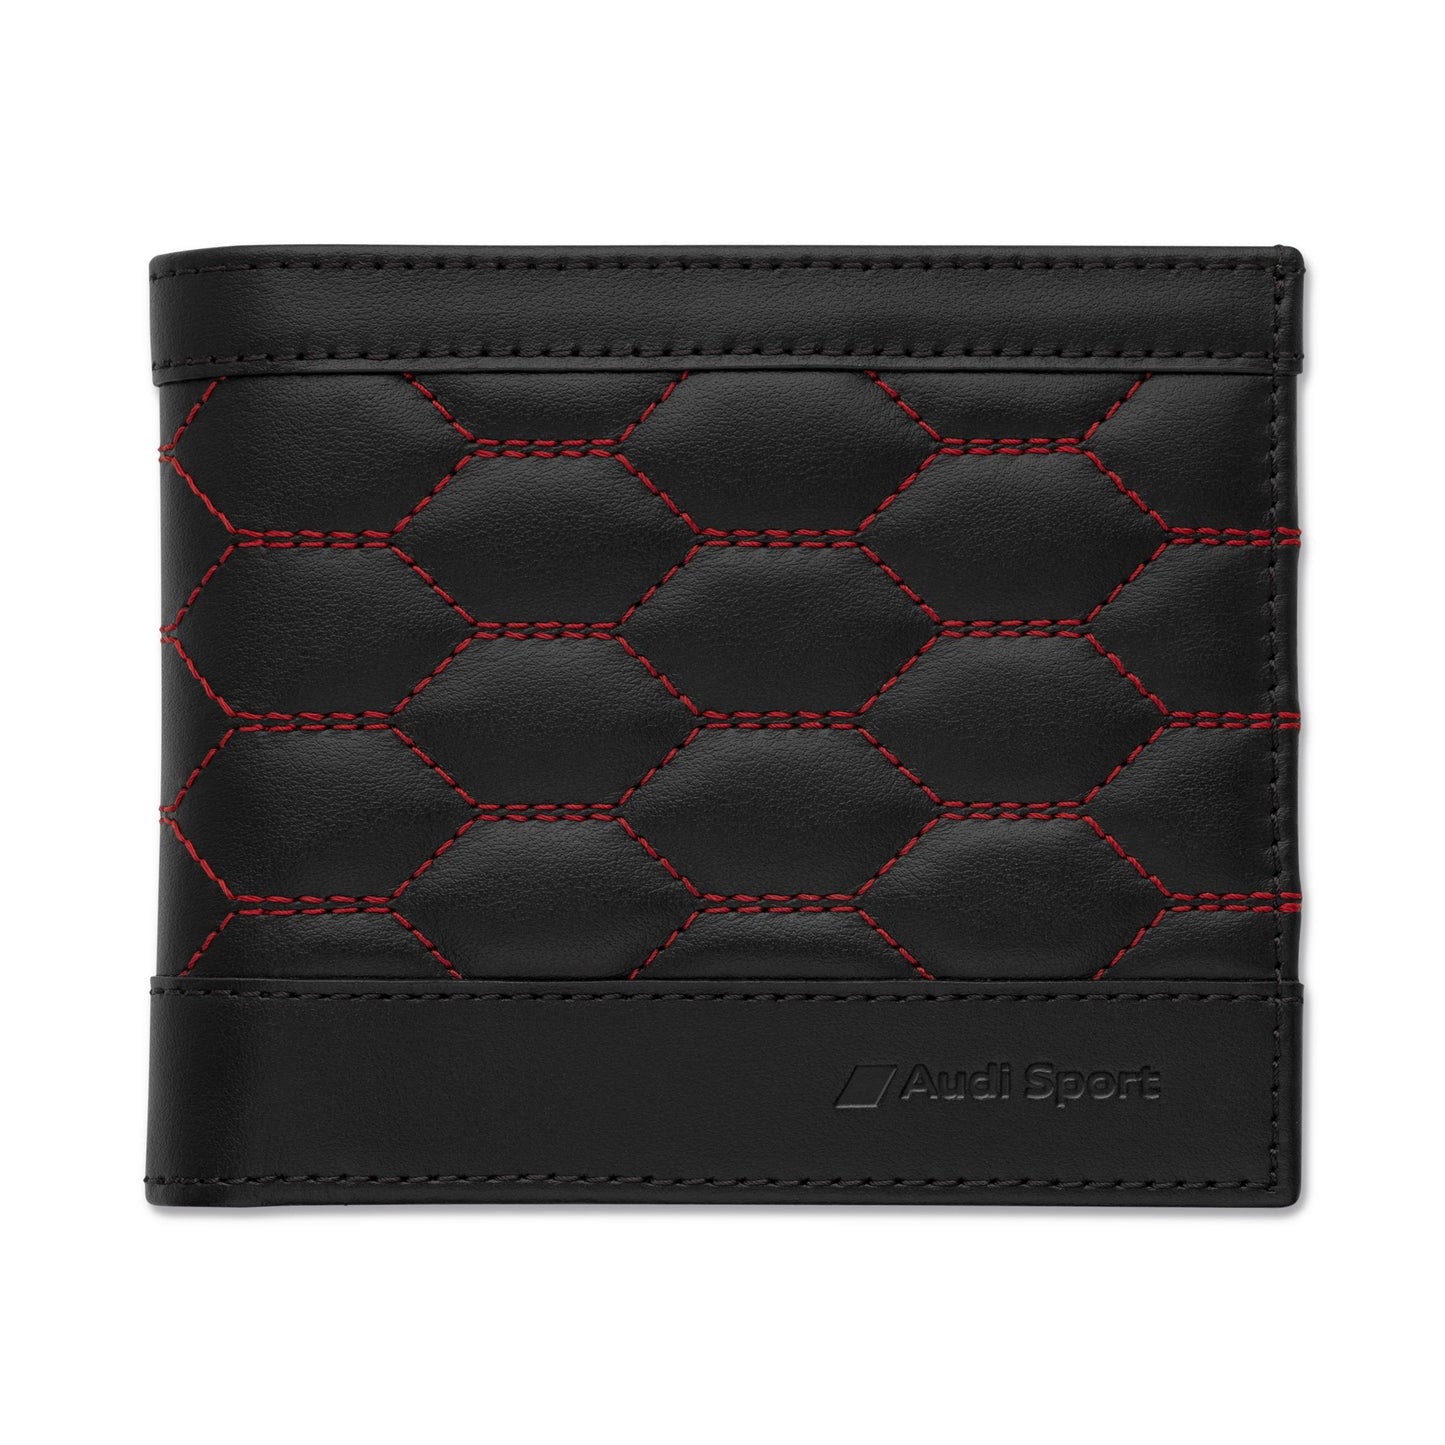 Audi Sport wallet leather, mens, black-red